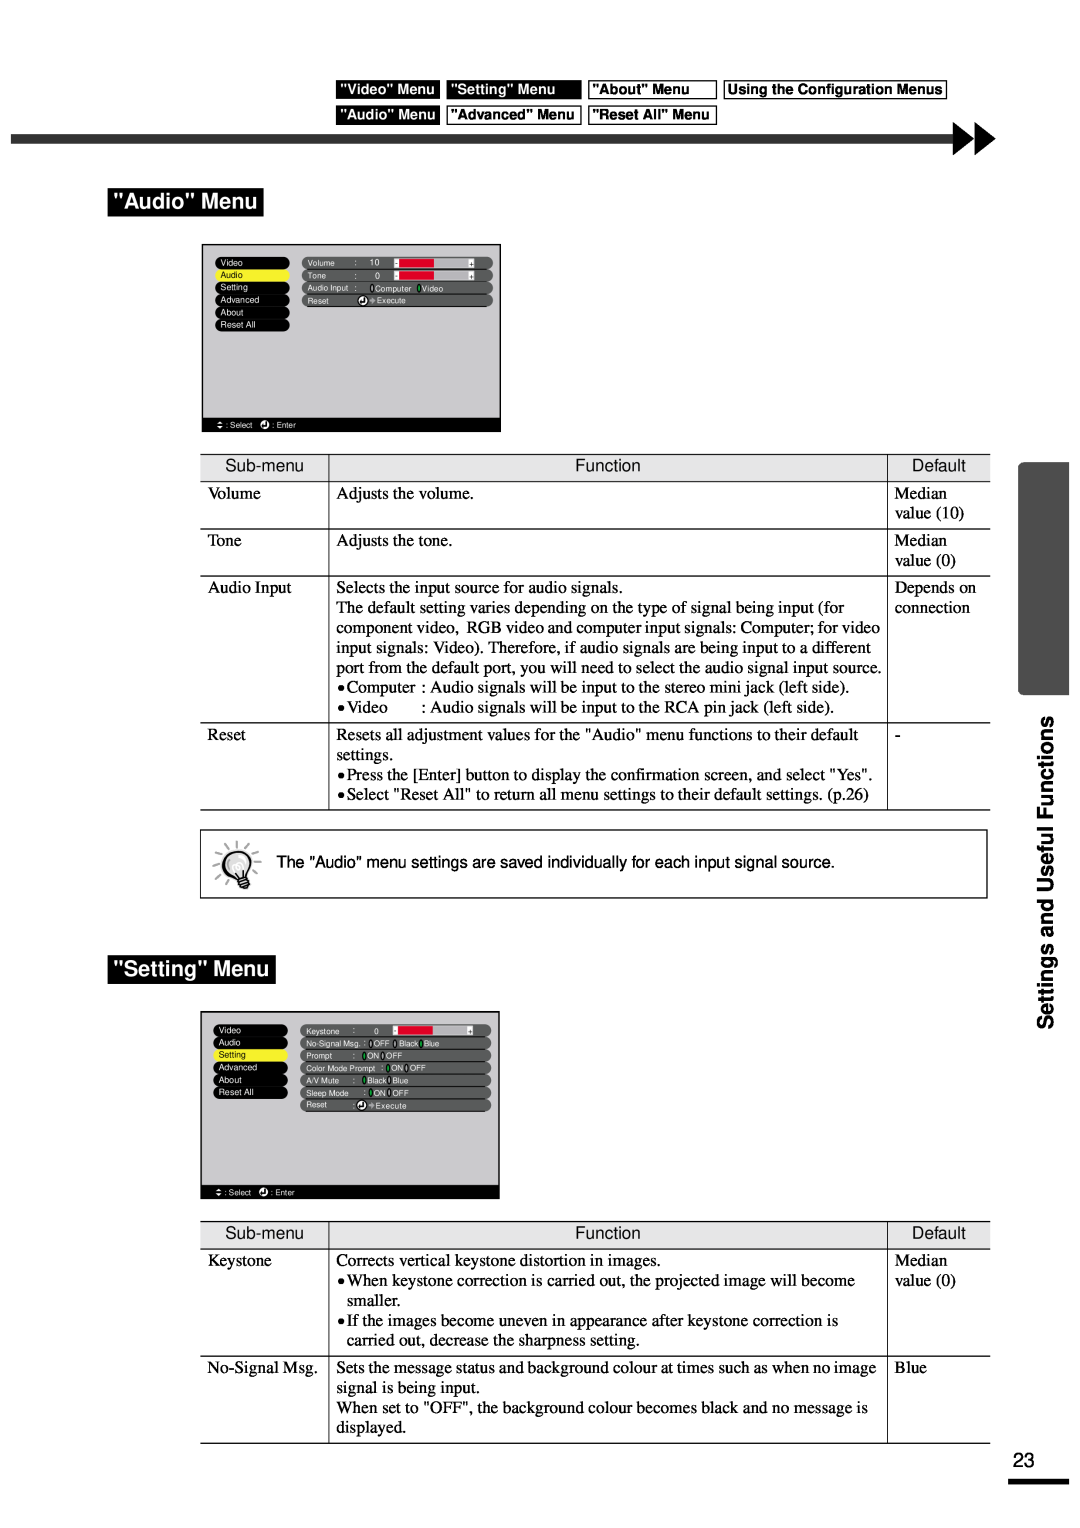 Epson EMP-30 manual Audio Menu, Setting Menu, Settings and Useful Functions, About Menu 